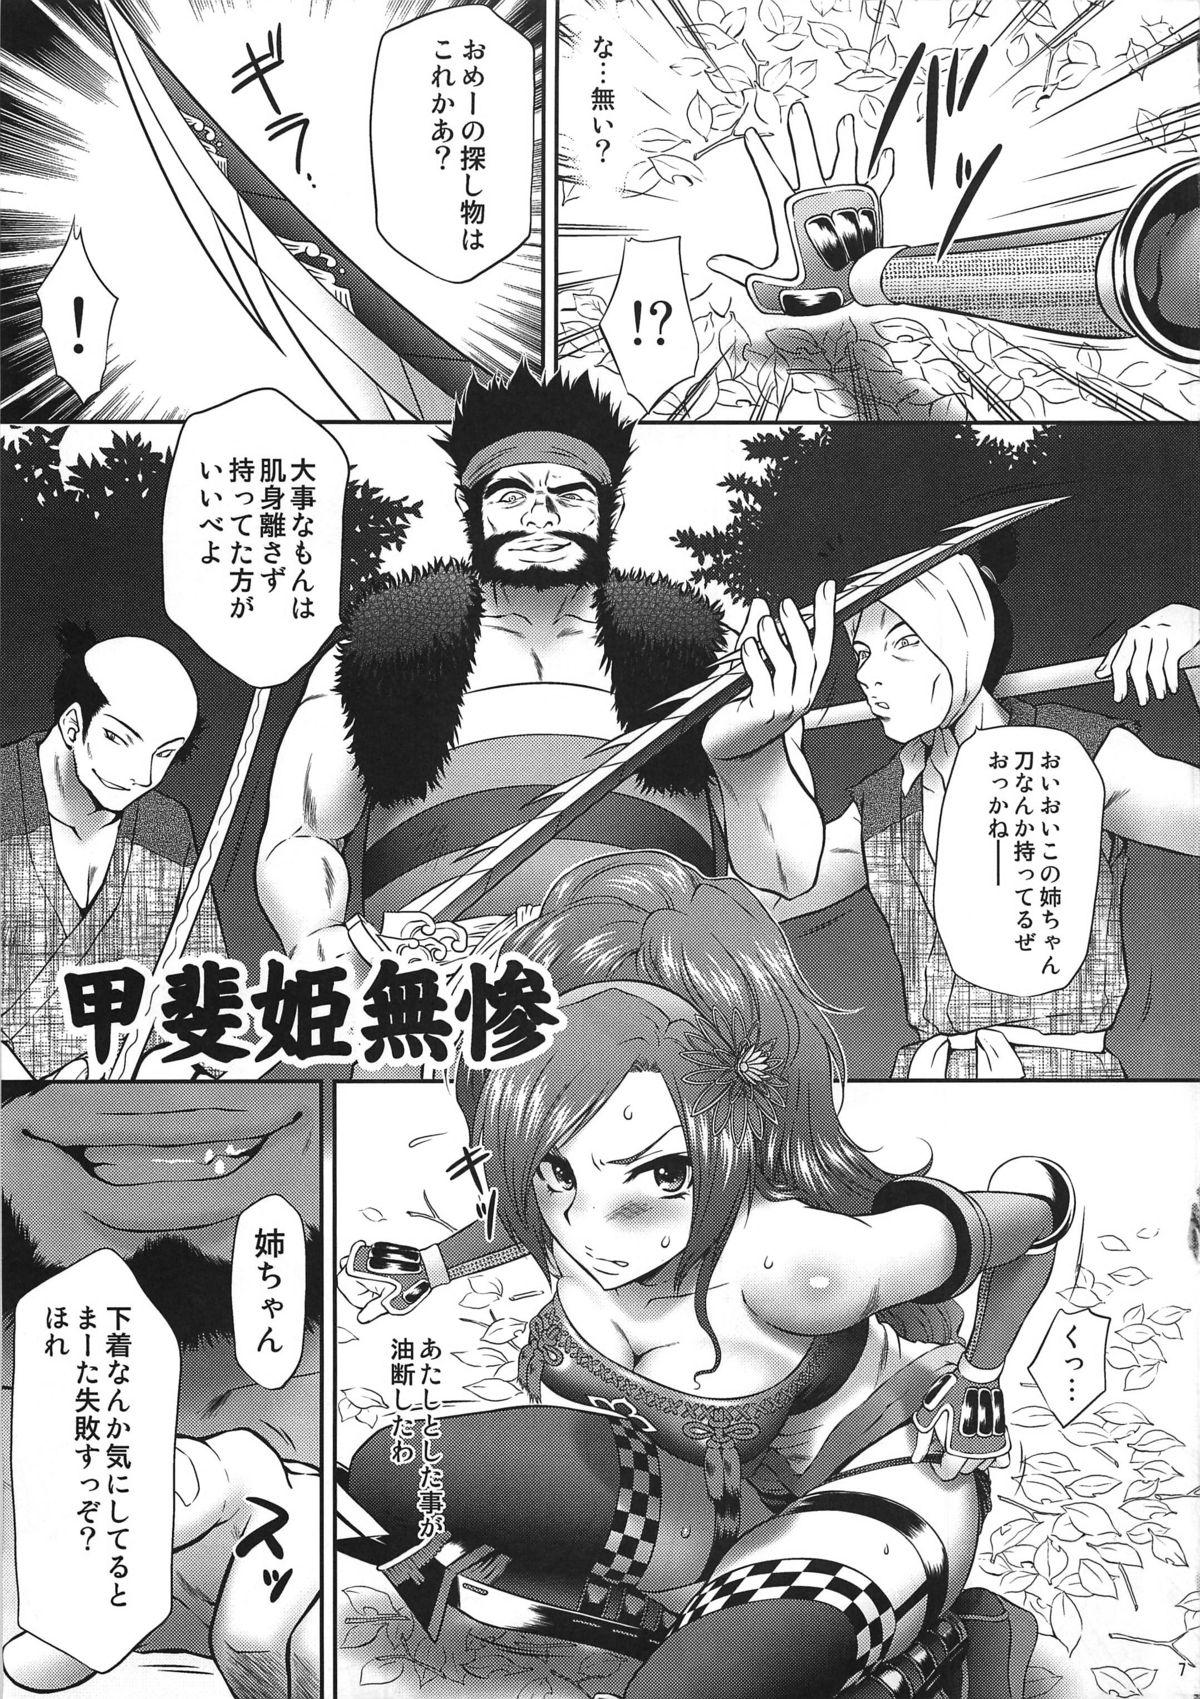 Argenta Kaihime Muzan - Samurai warriors Blows - Page 6